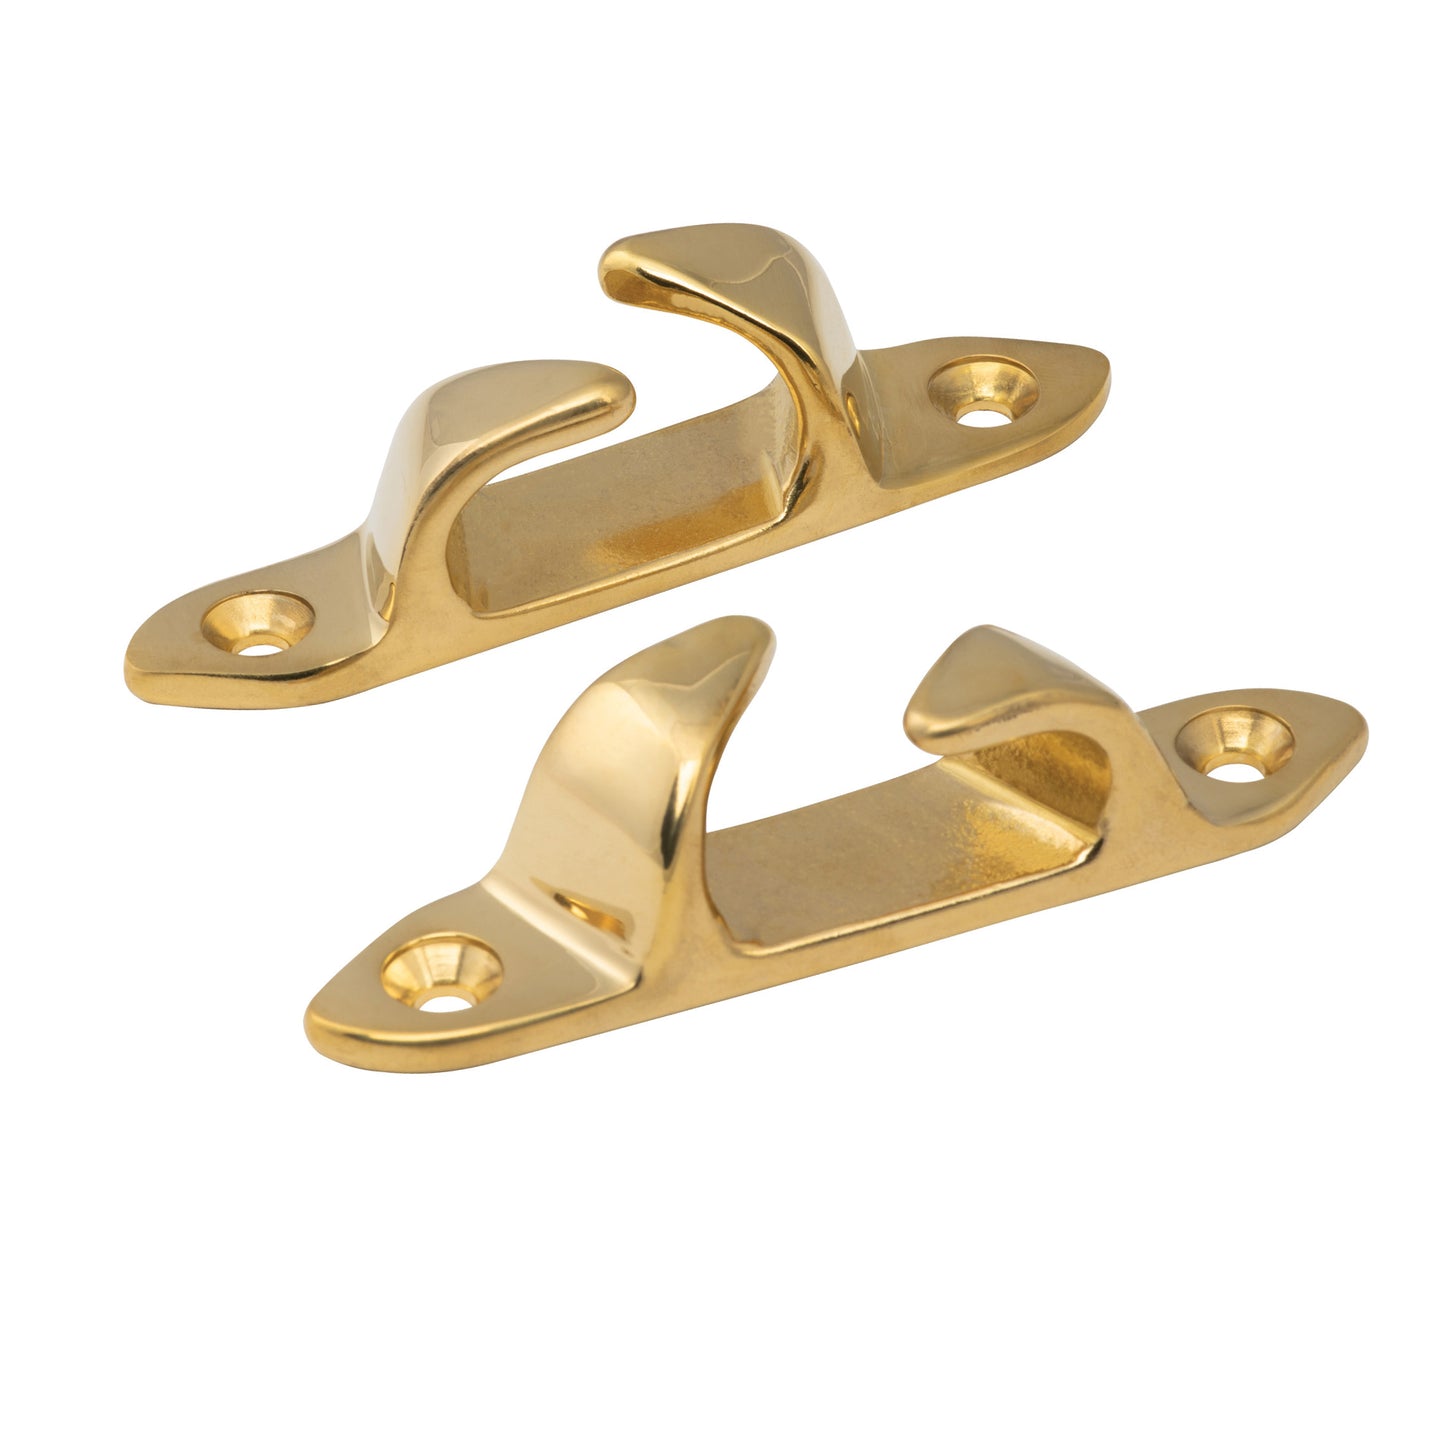 4" Polished Brass Skene Bow Chock